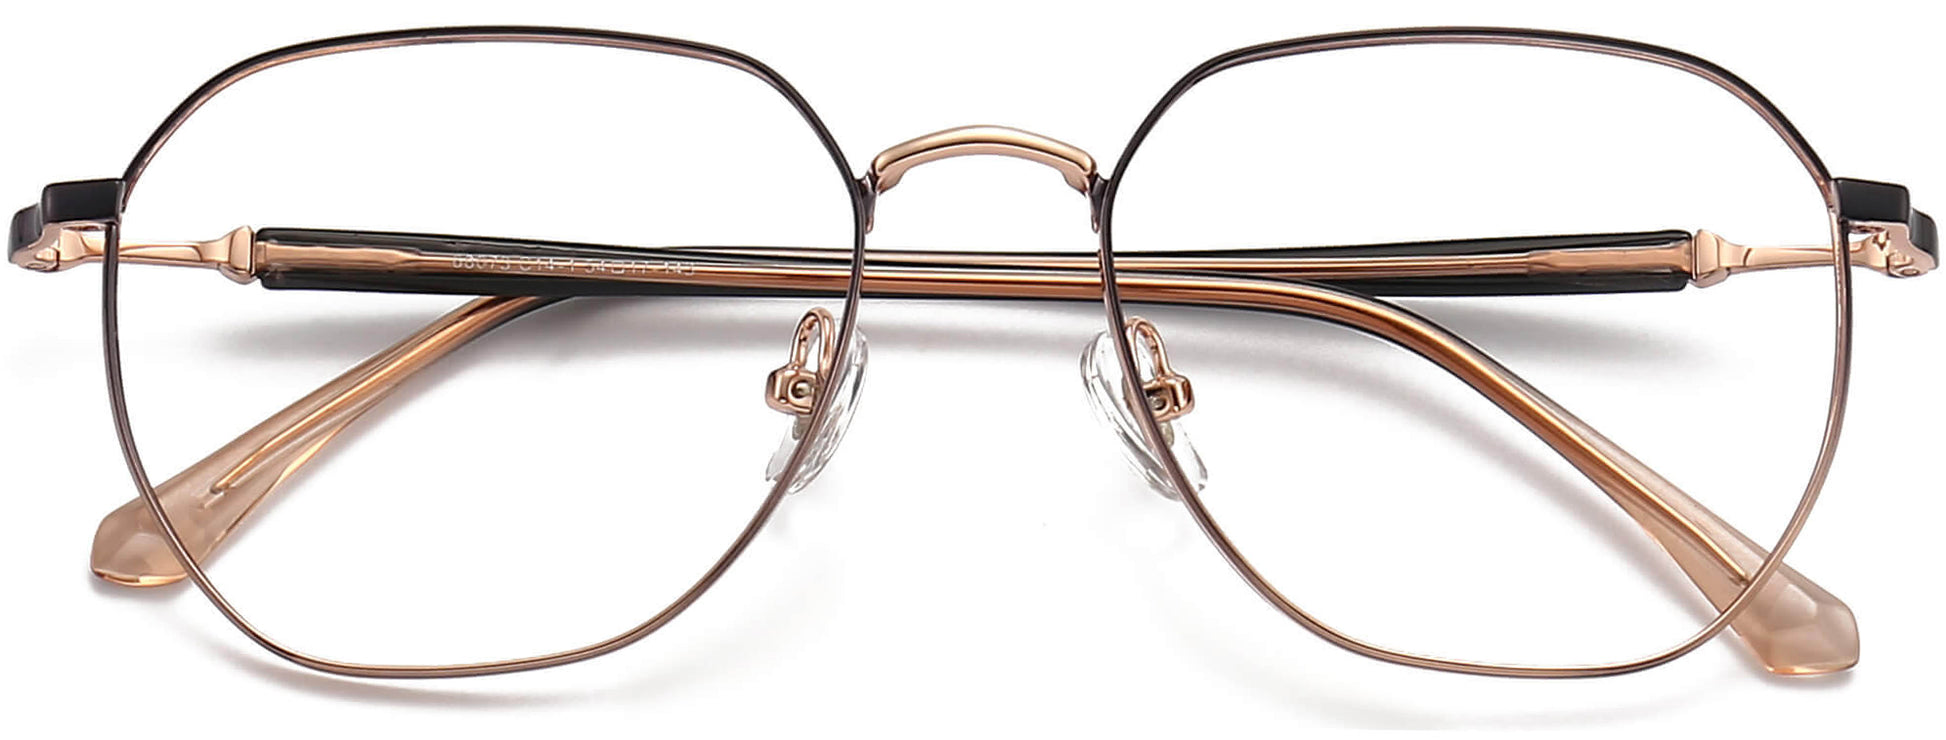 Elise Geometric Black Eyeglasses from ANRRI, closed view